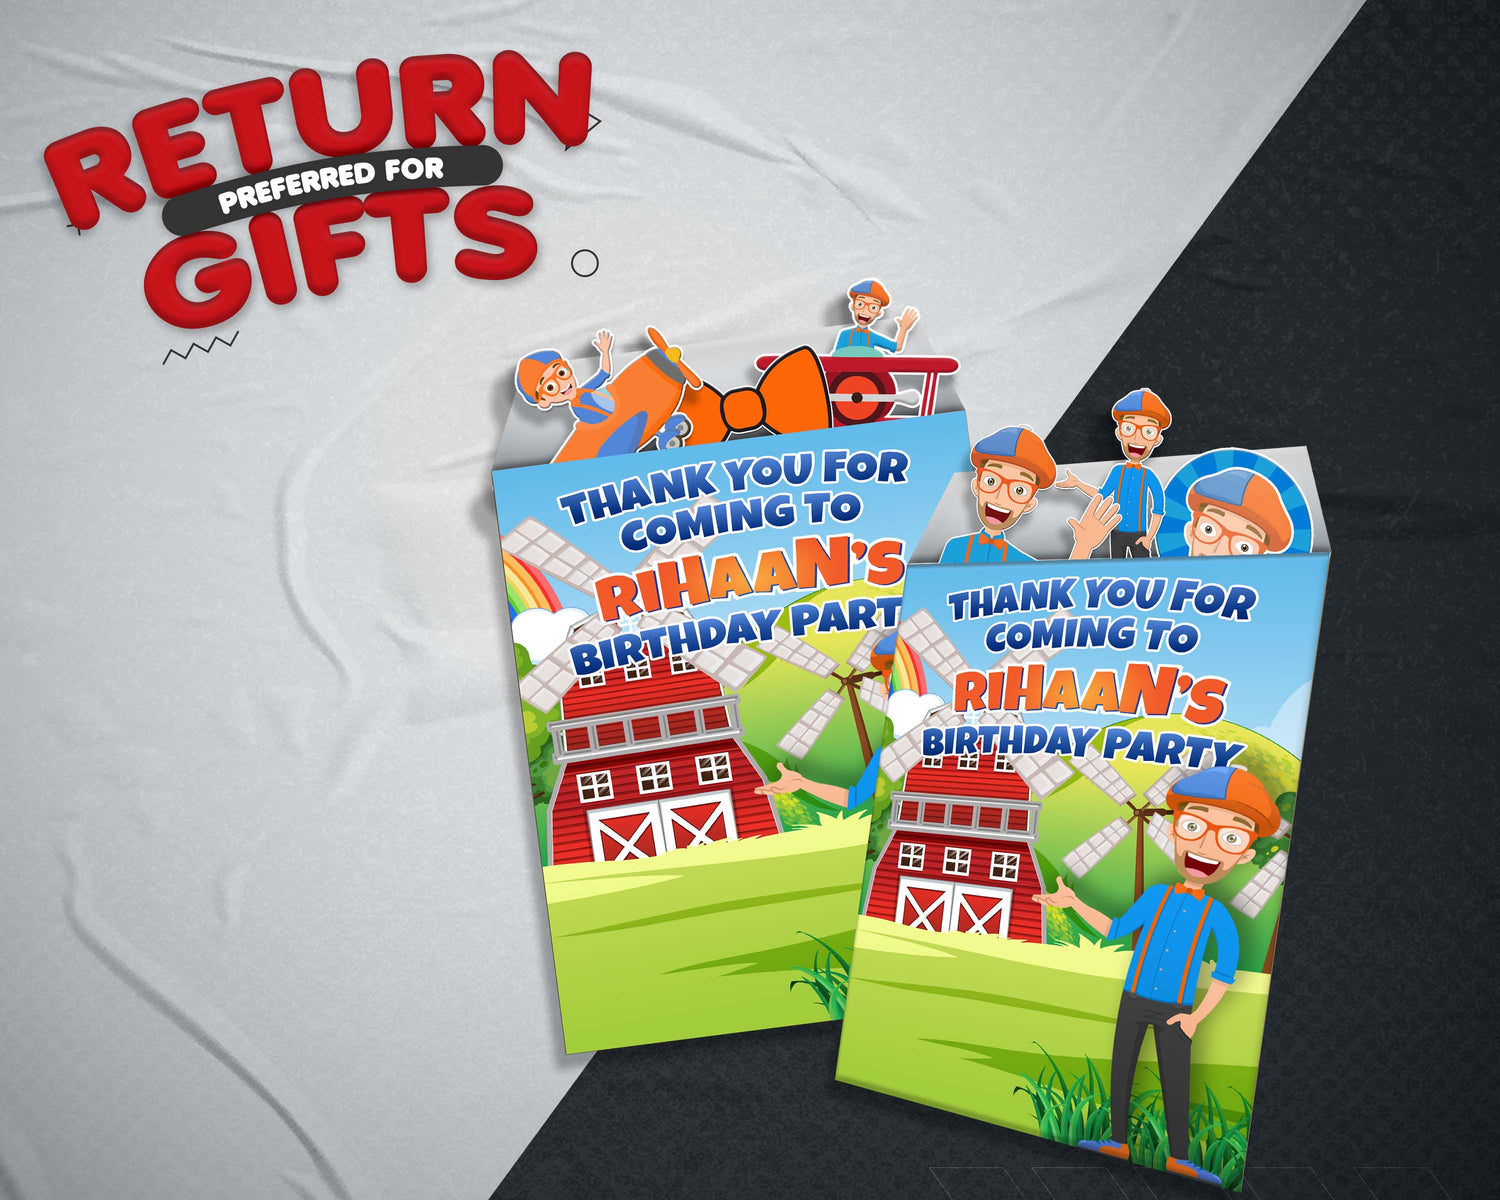 PSI Blippi Theme Mini Magnetic Return Gift Pack